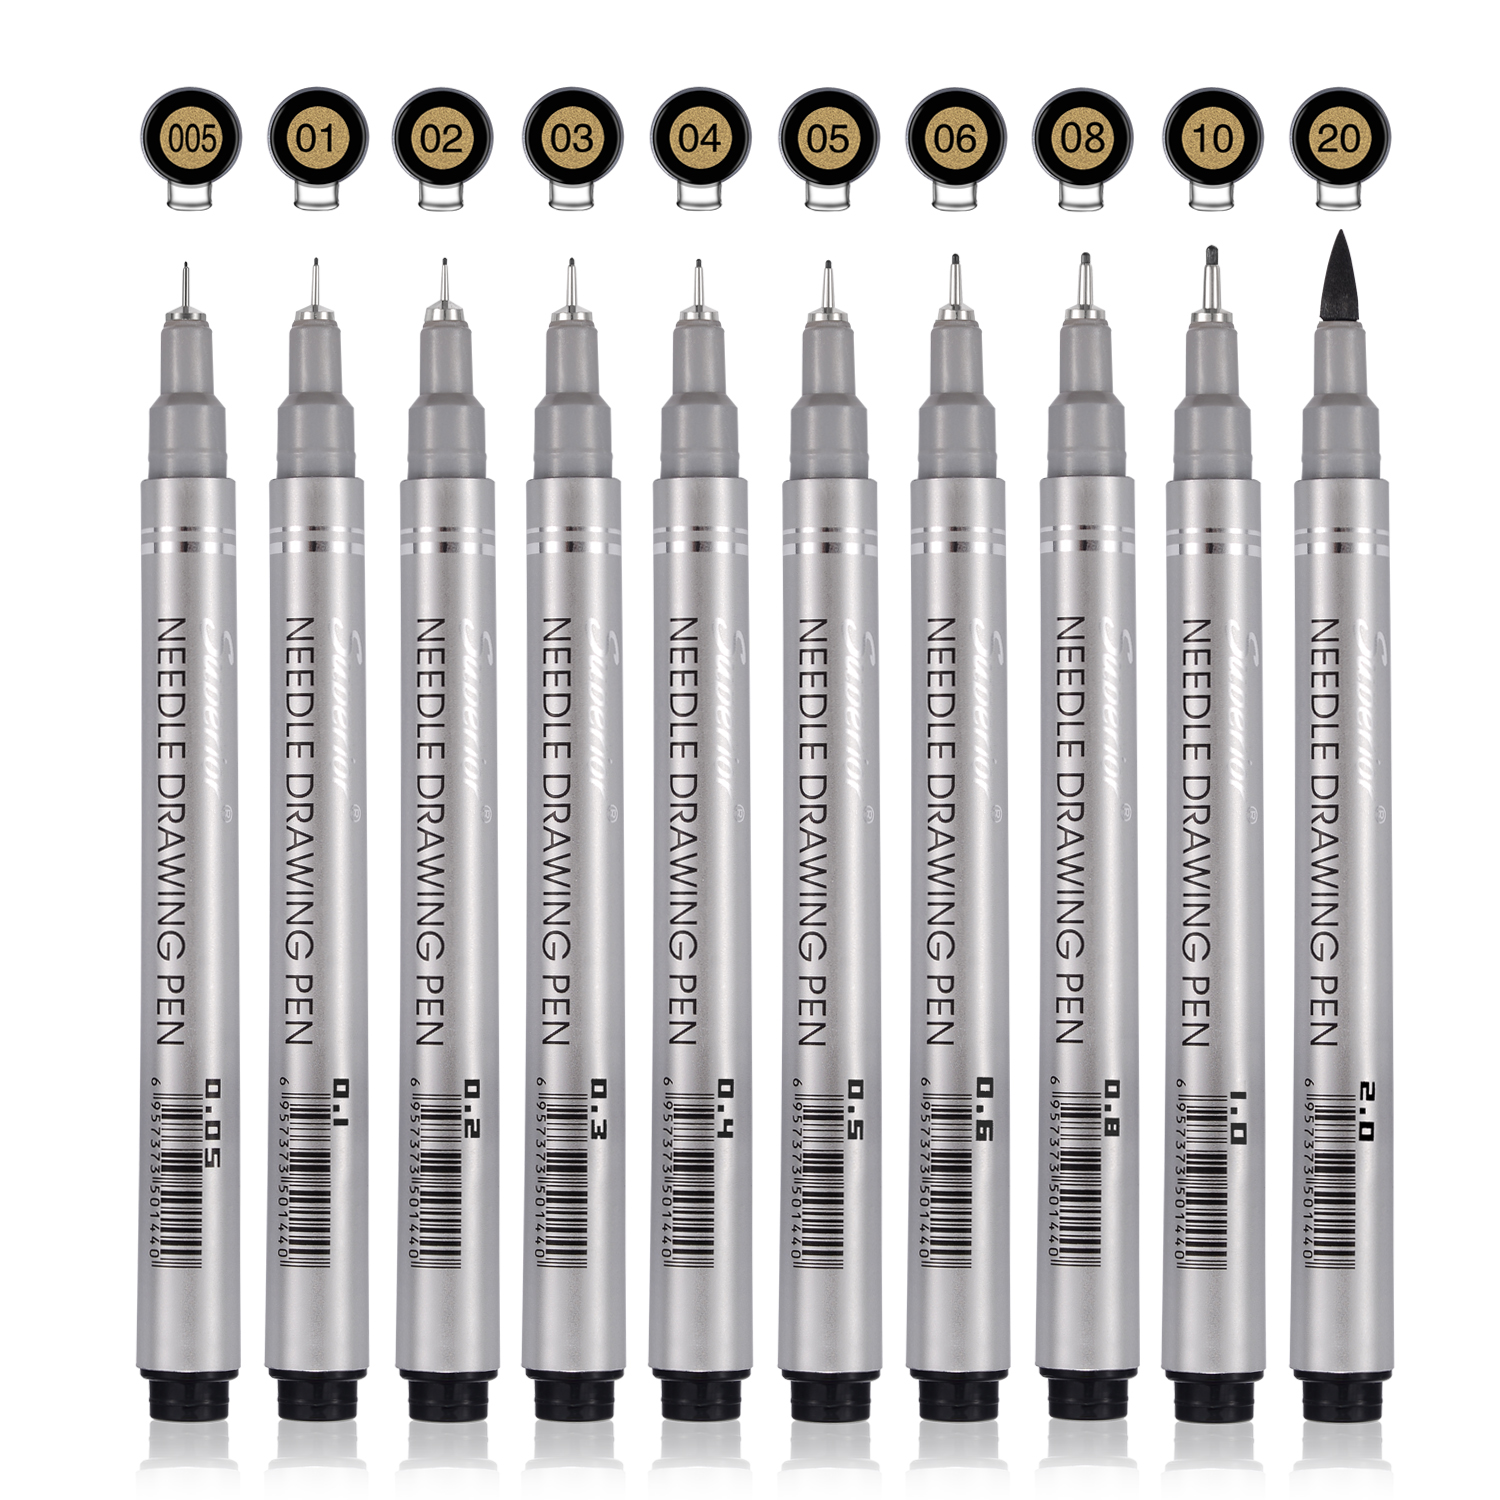 15Tip Hand Lettering Neelde Drawing Pen Pigment Liner Micron Pen 005 01 02  03 04 05 08 1.0 Brush Fineliner Sketching Art Markers